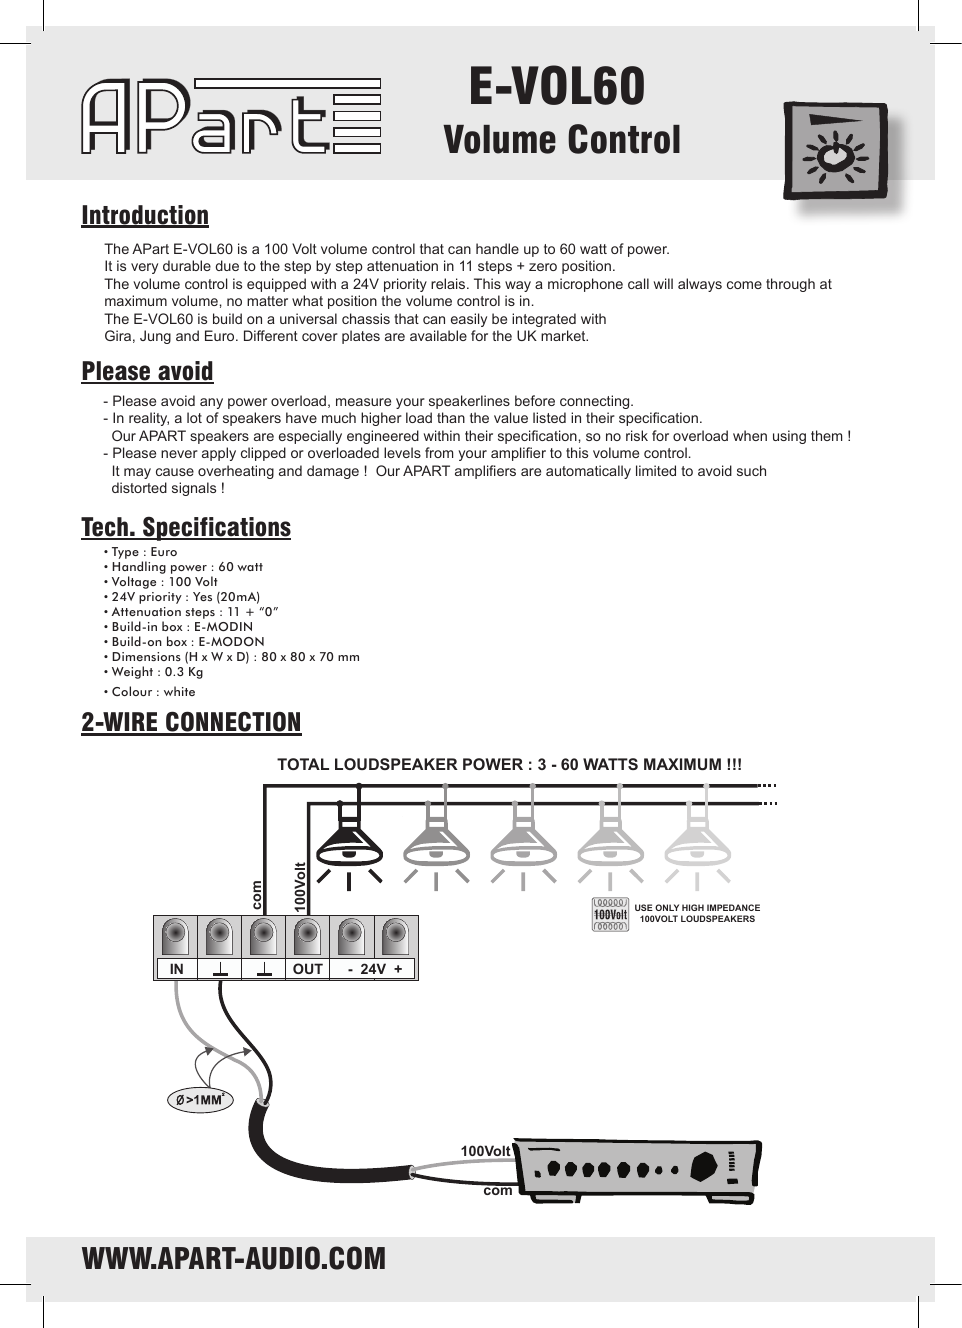 Page 1 of 2 - E-VOL60 Manual